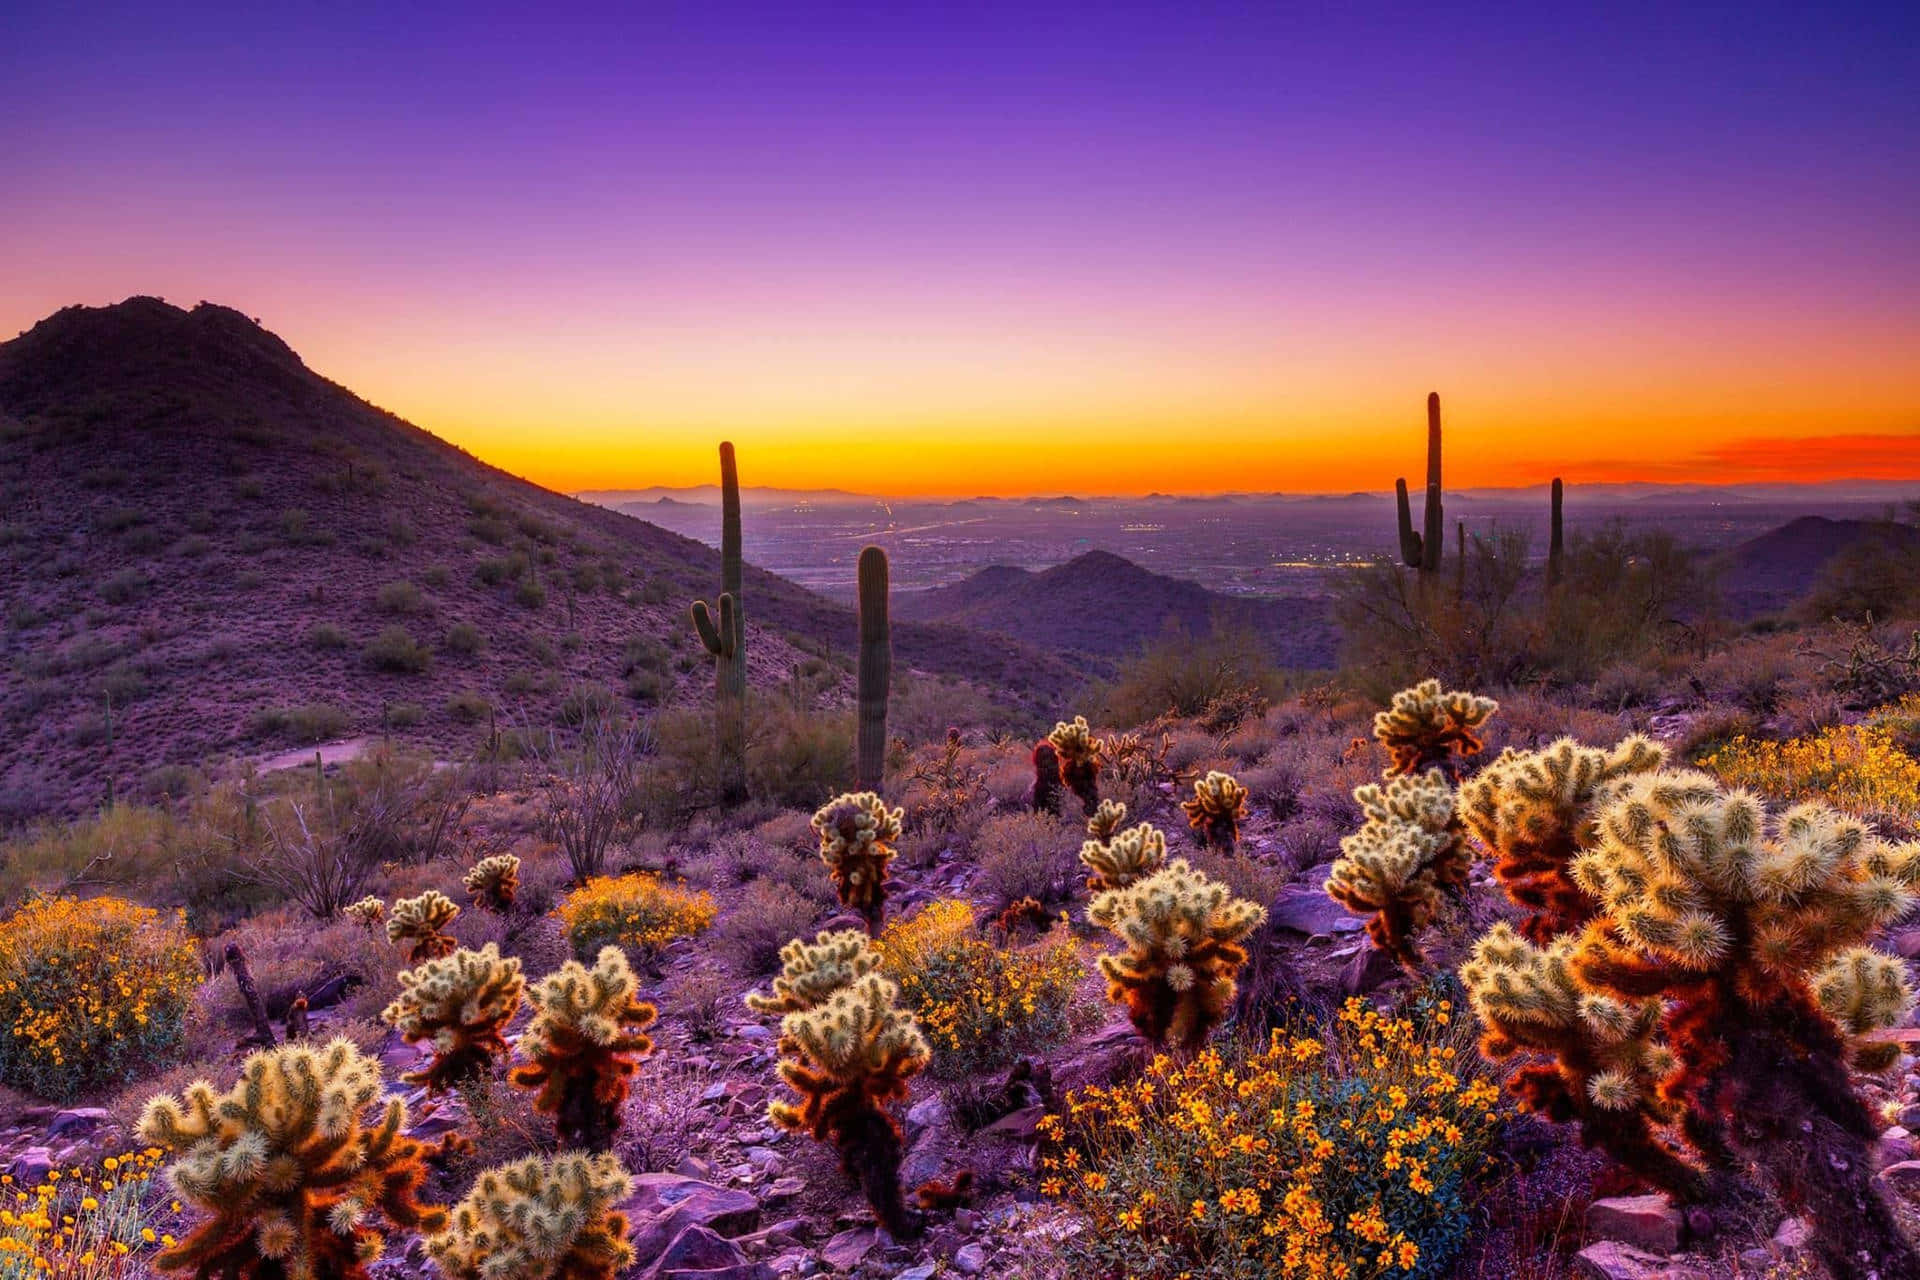 Etsolnedgangsbillede Over En Ørken Med Kaktusser Og Blomster.